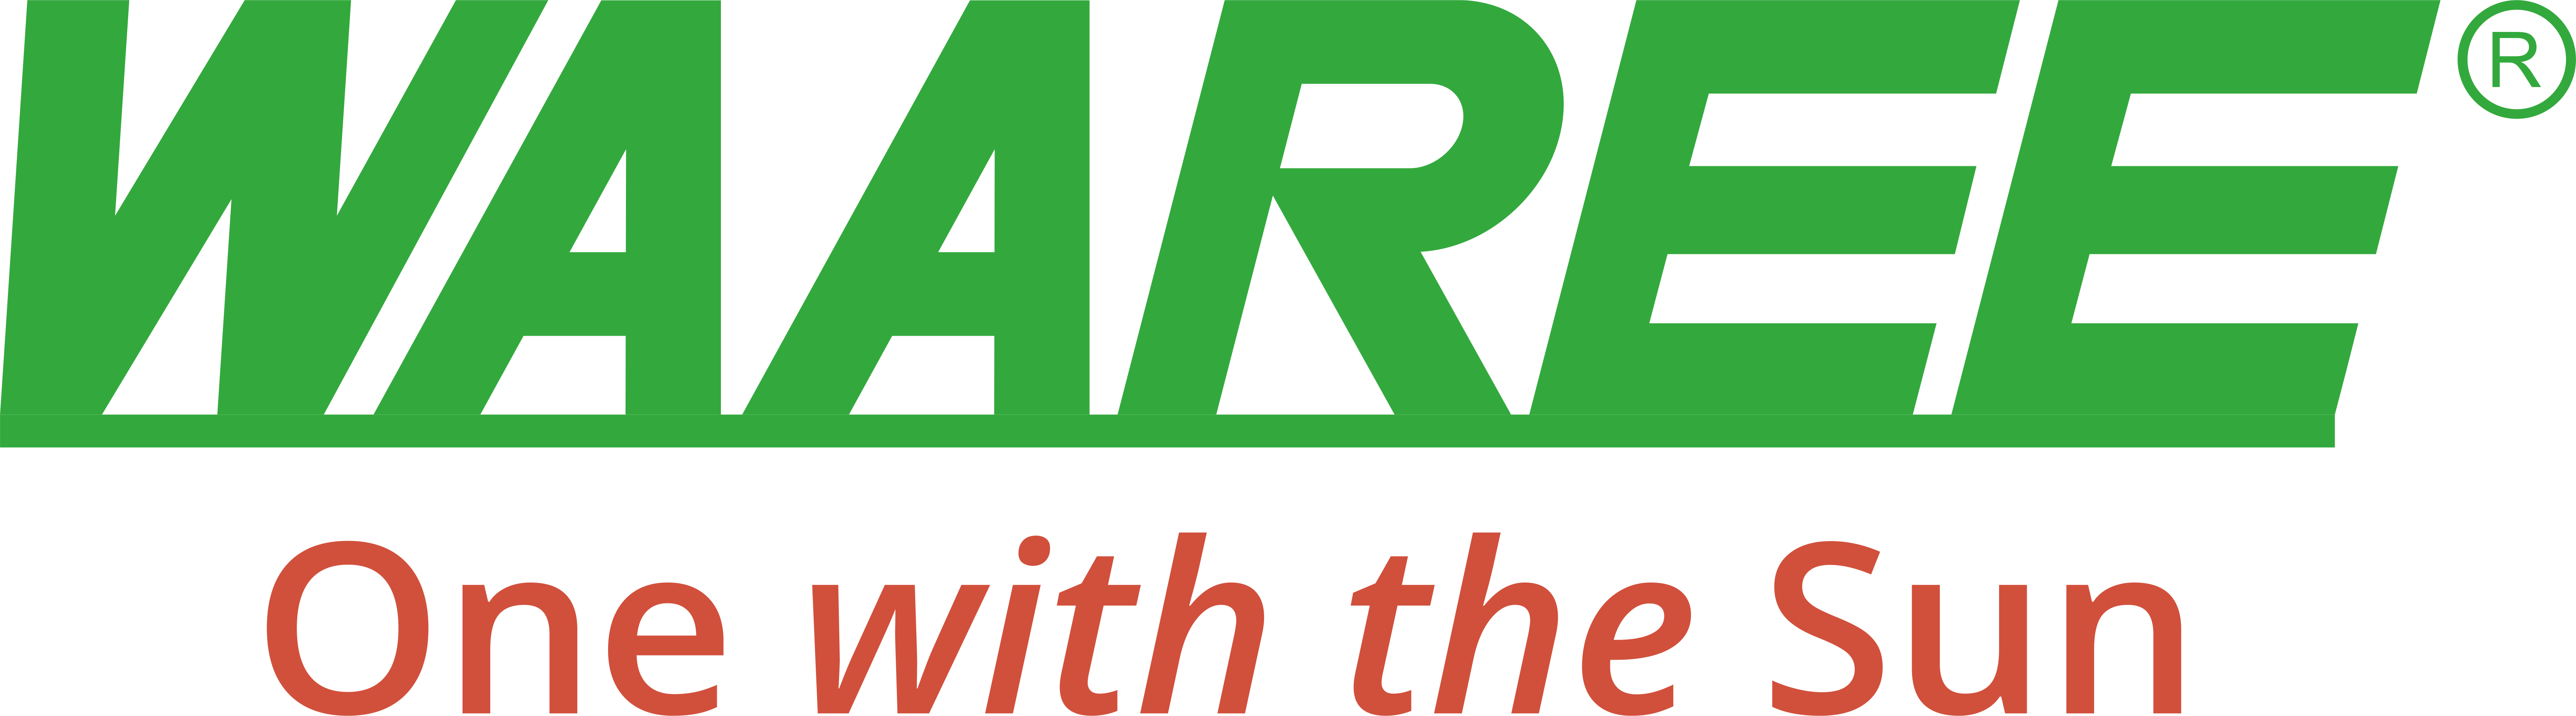 Legal Partner - Waaree Energies Ltd Logo (6778x1883)